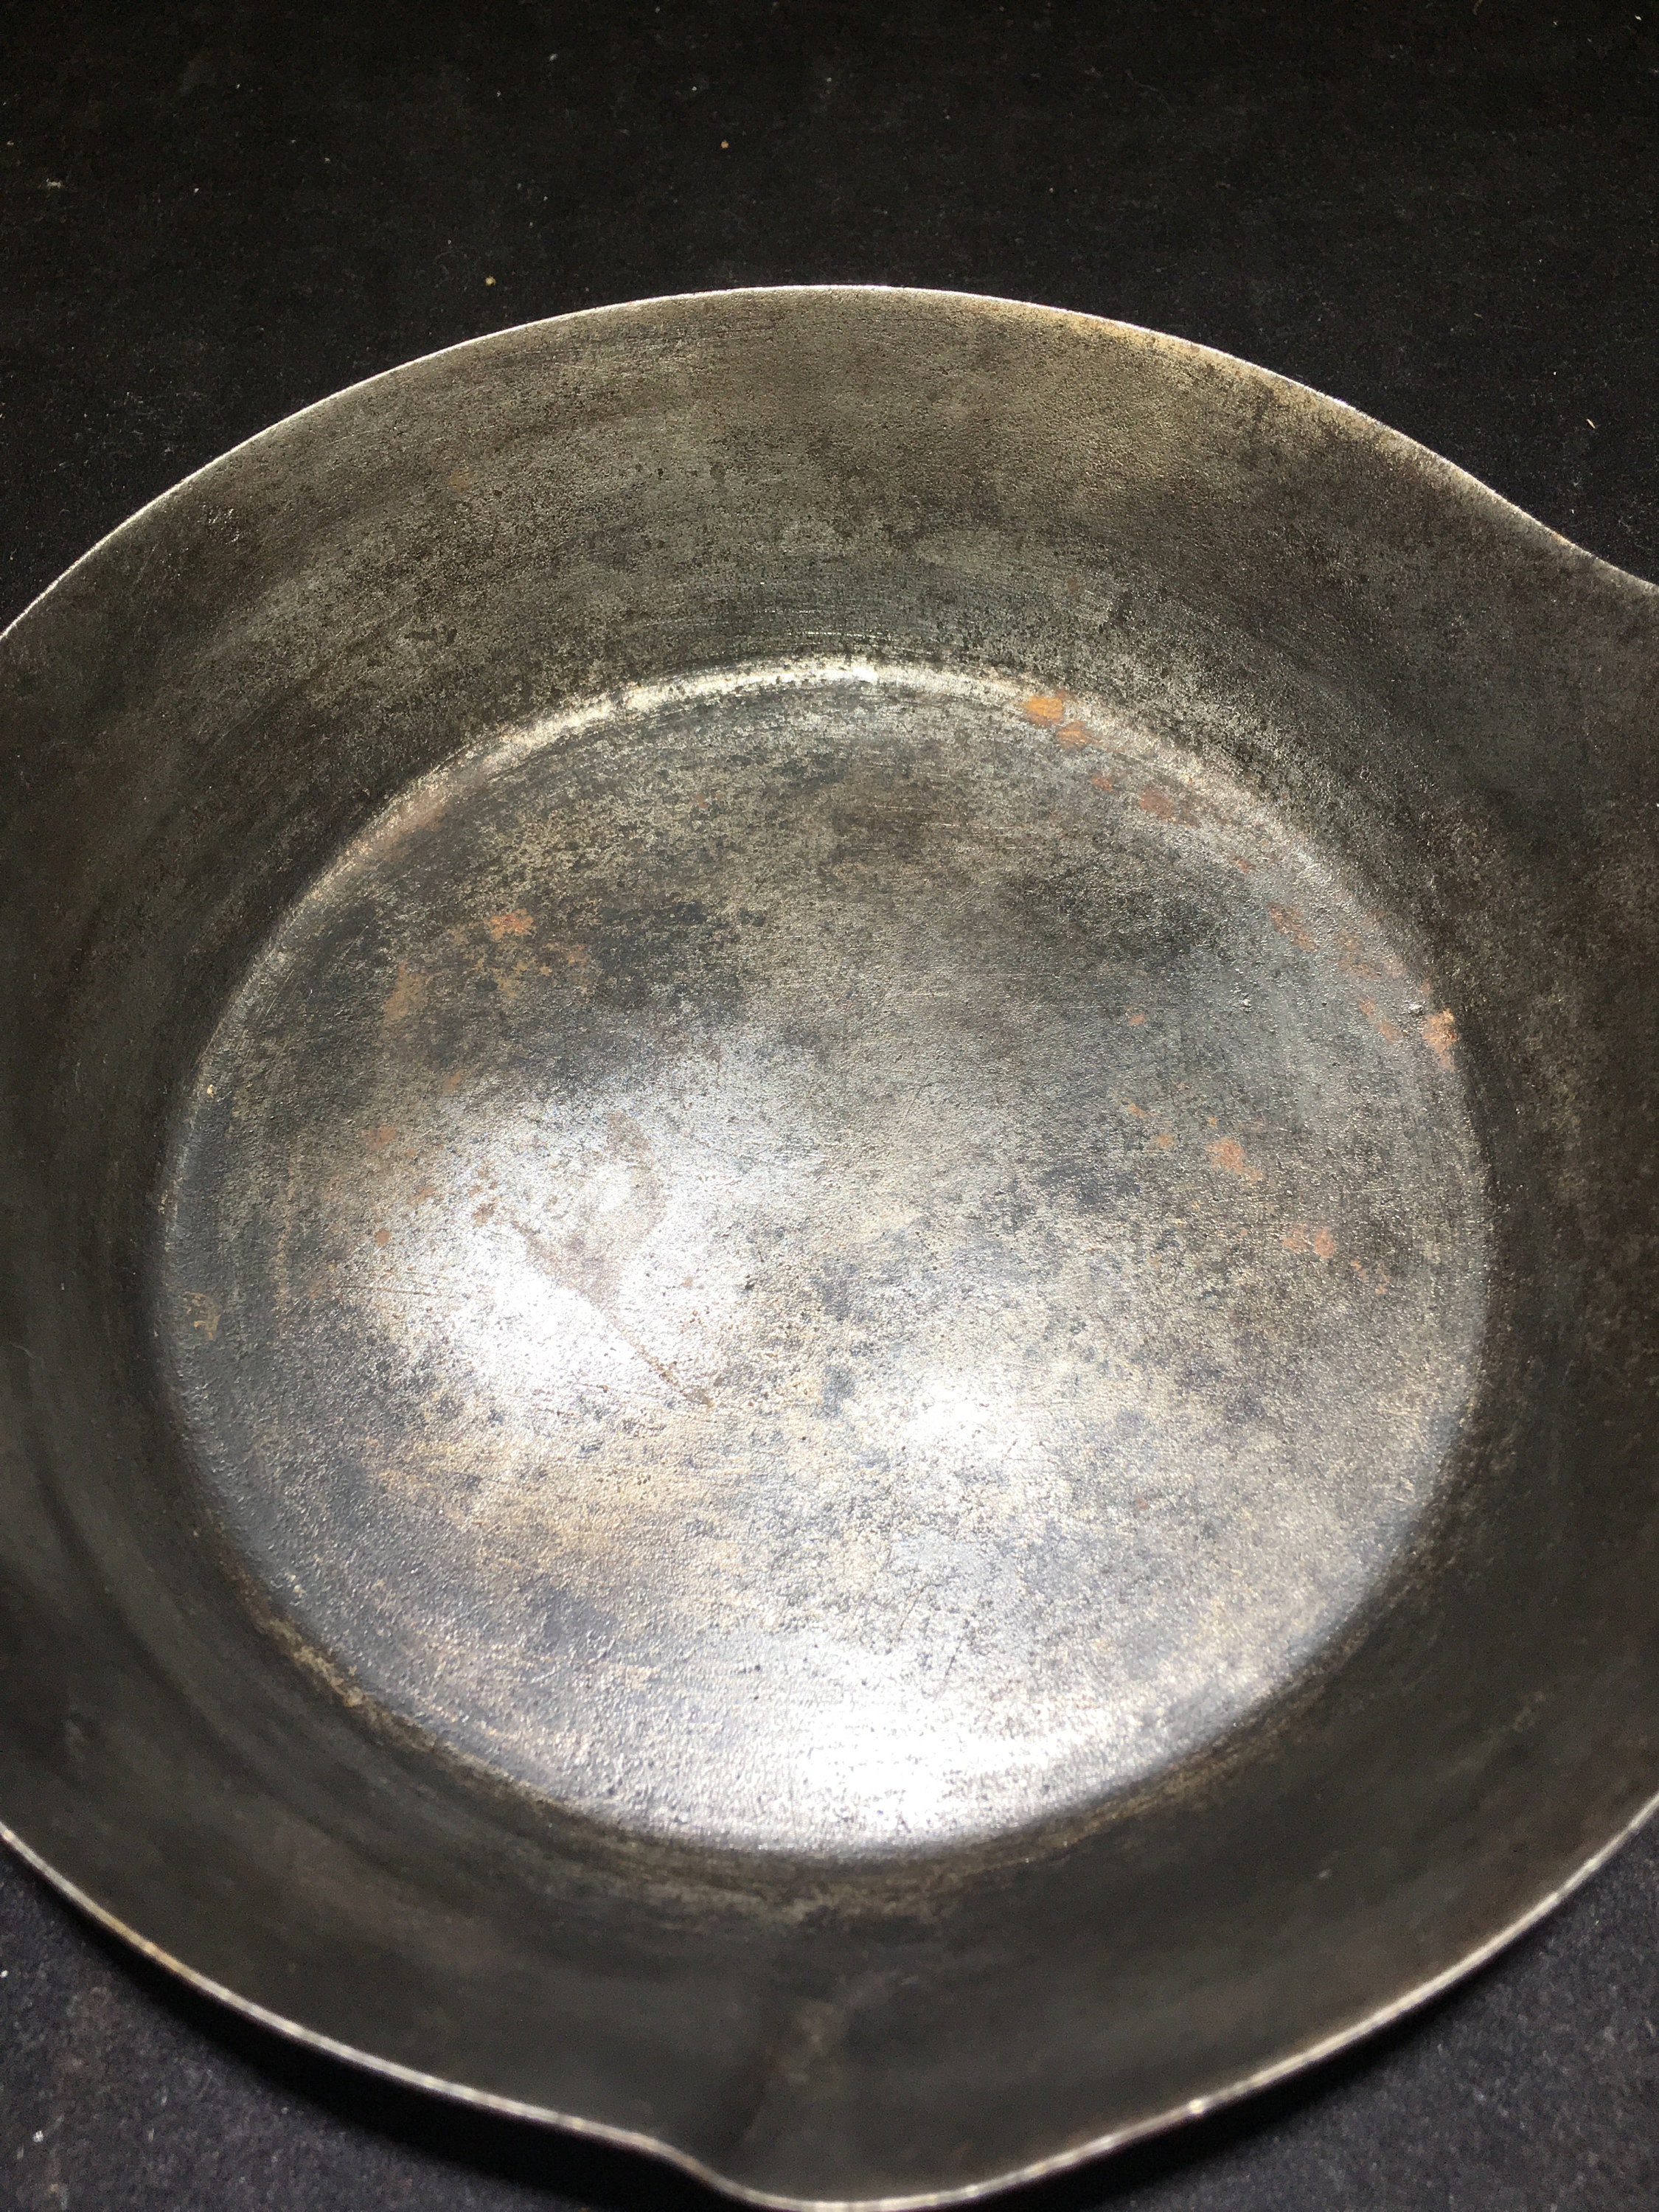 Vintage National Tin Cold Handle Frying Pan #39, 6